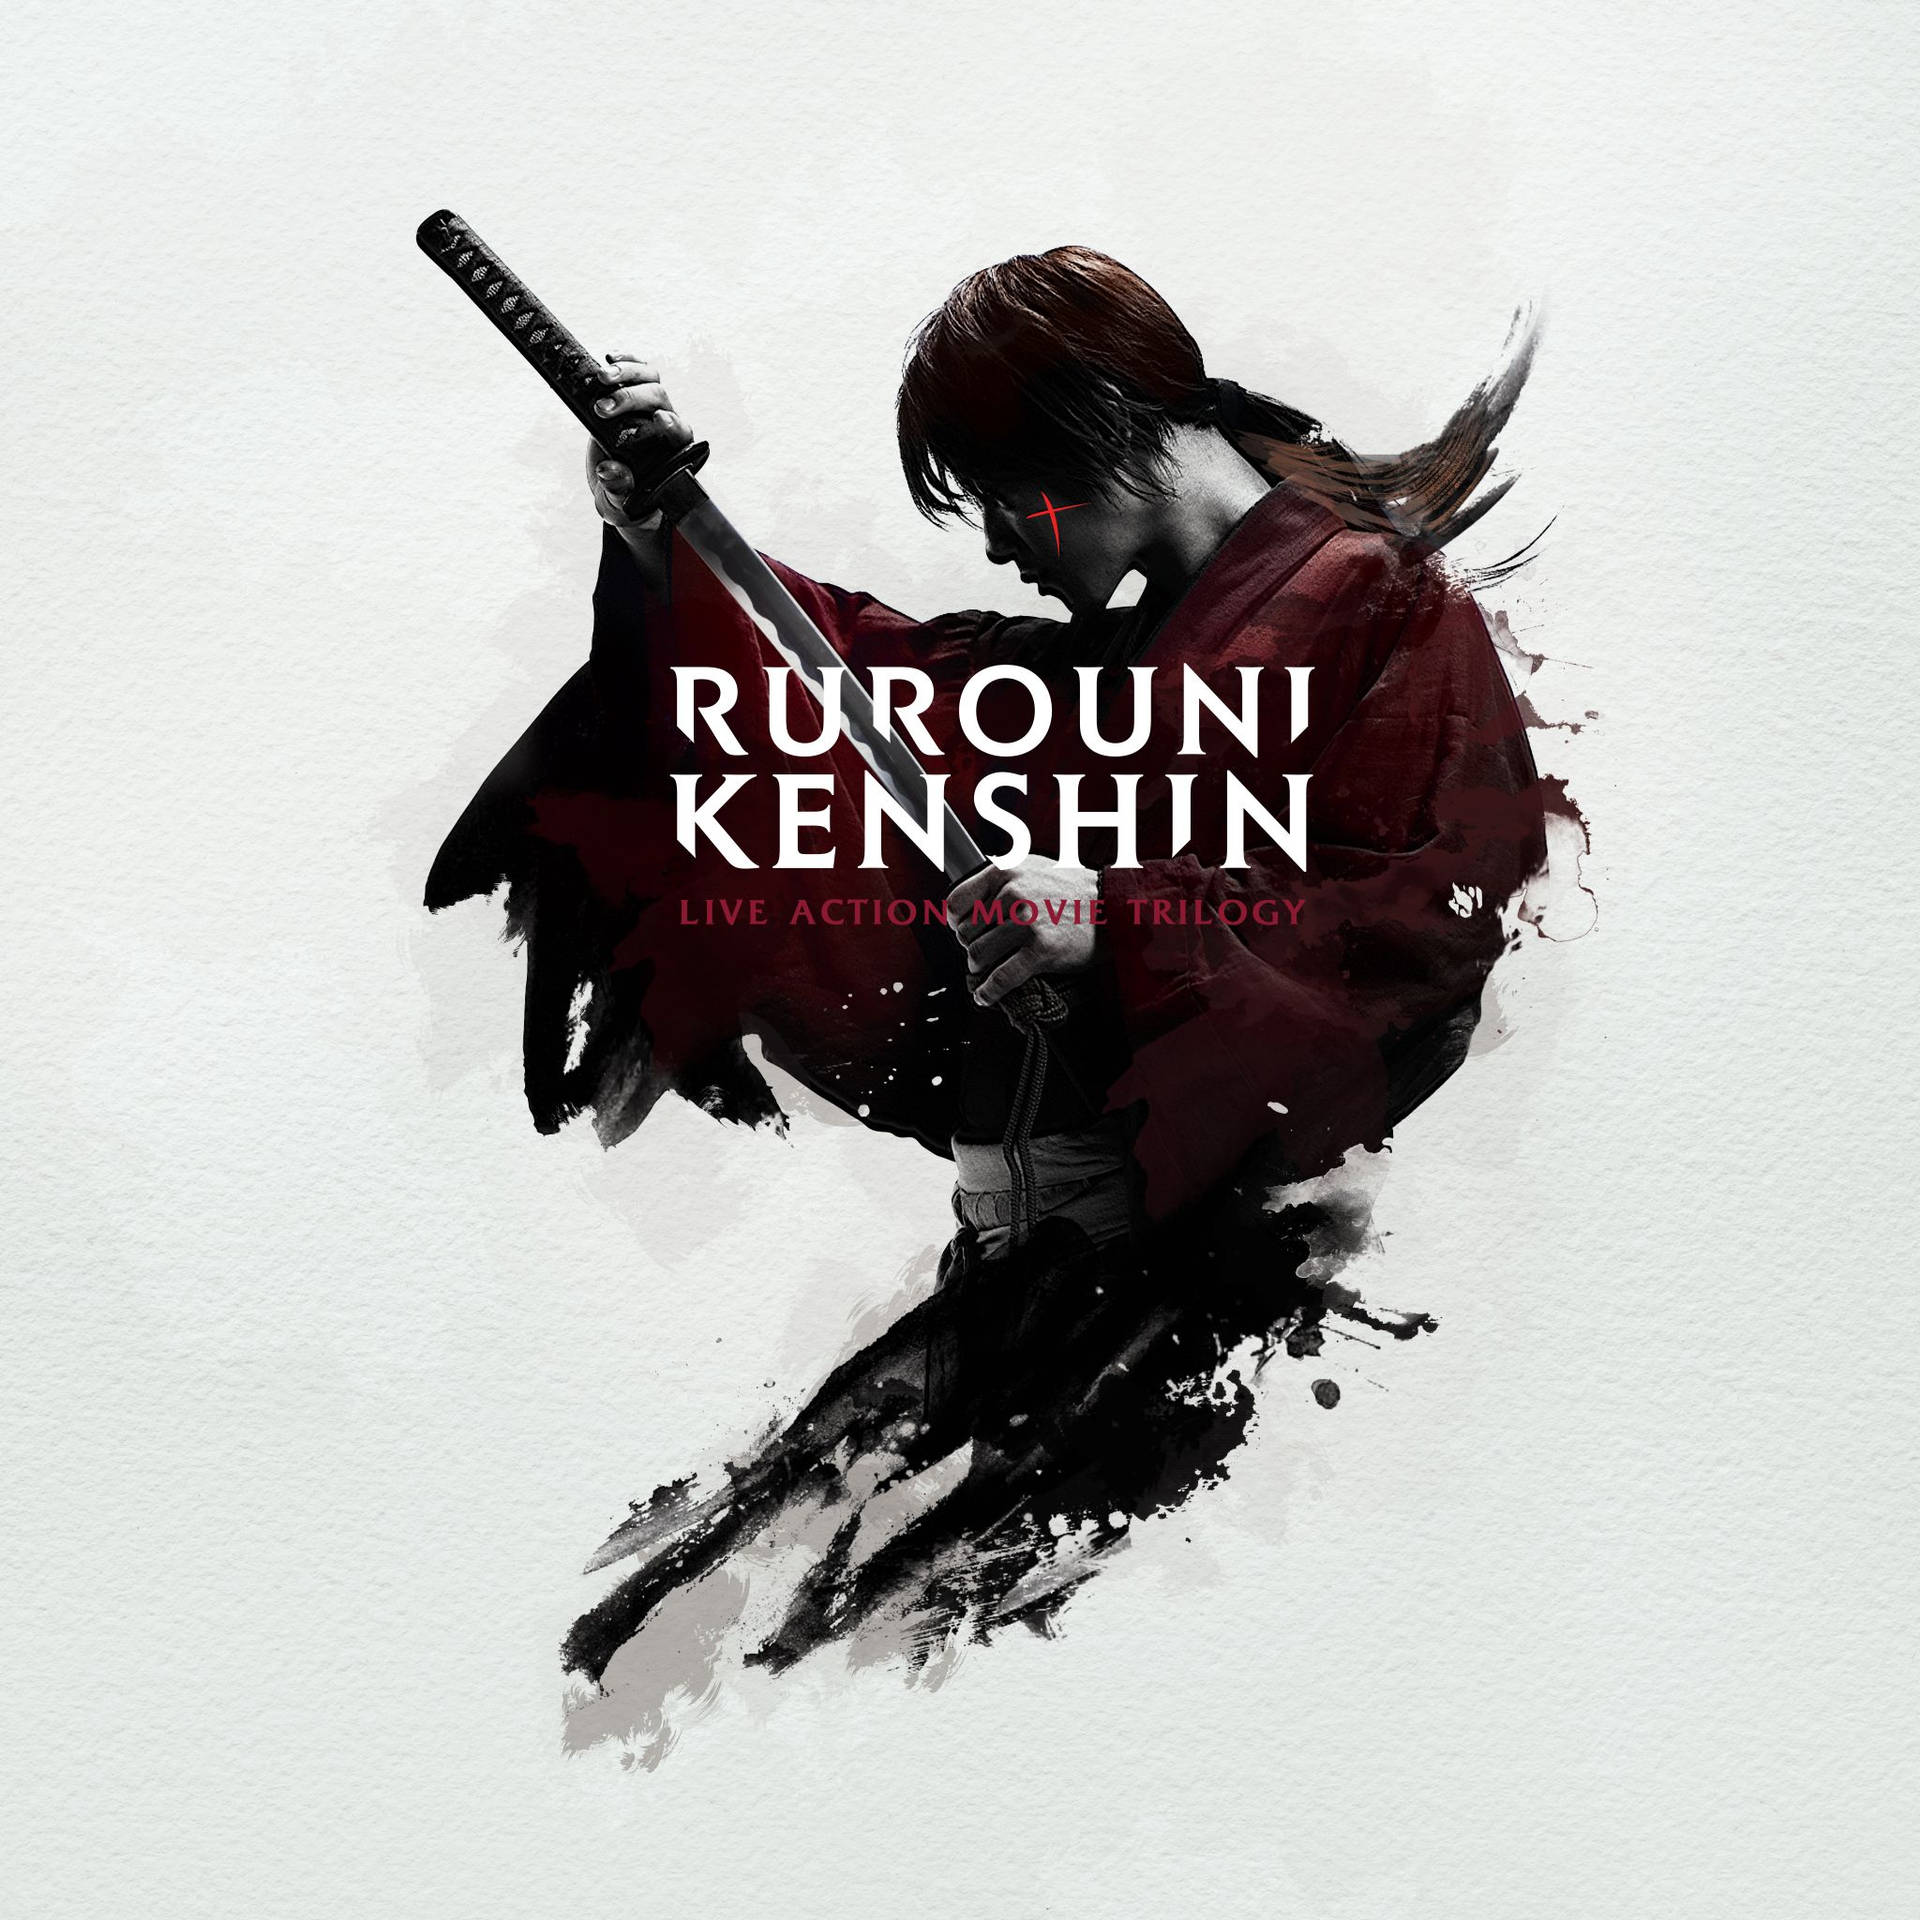 Download Rurouni Kenshin In Black Kimono Wallpaper